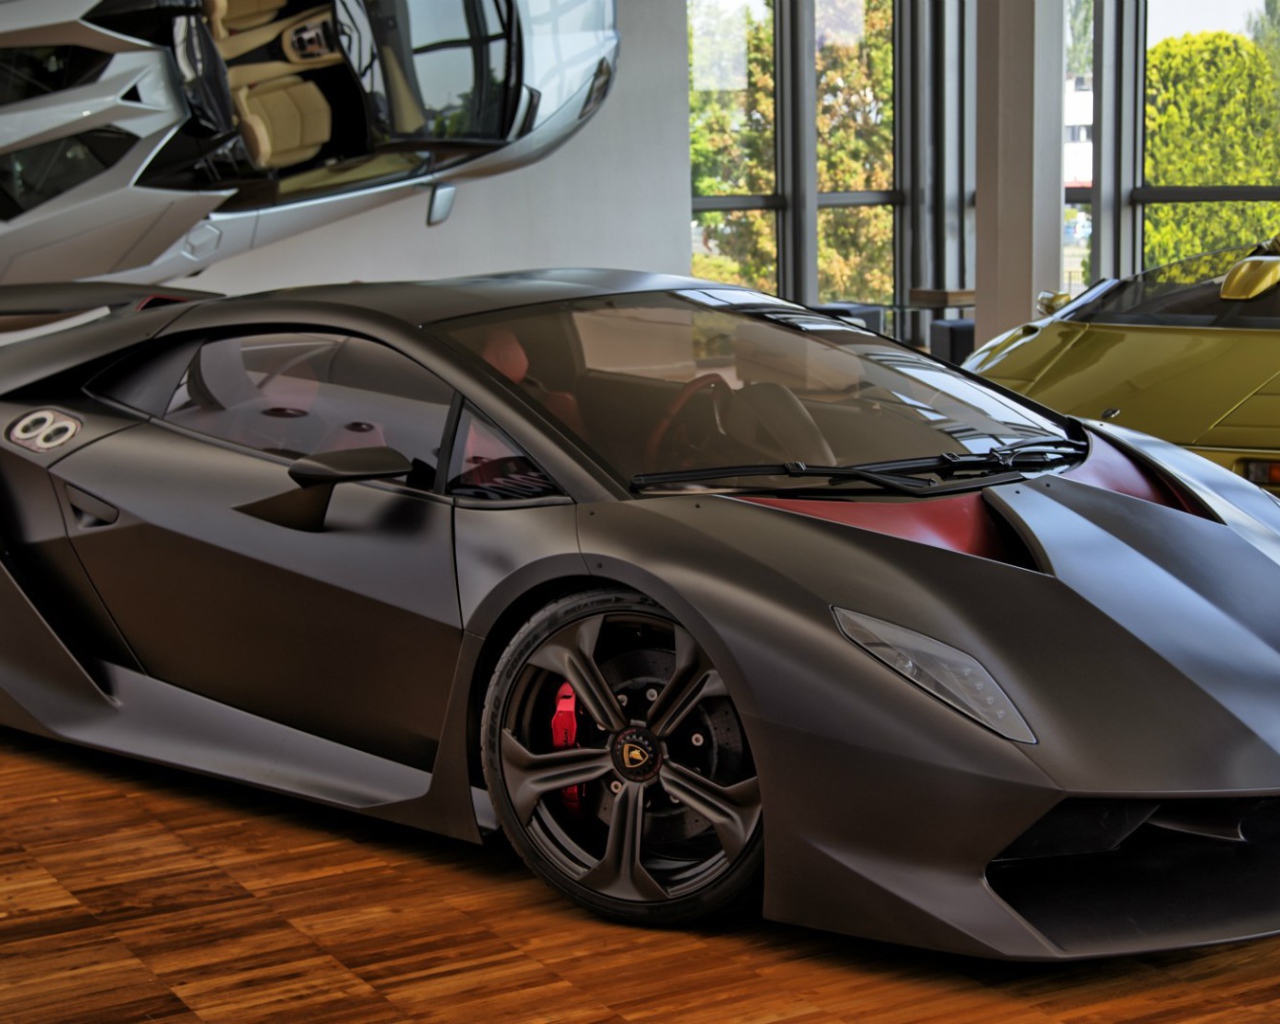 Автомобиль Lamborghini Sesto Elemento